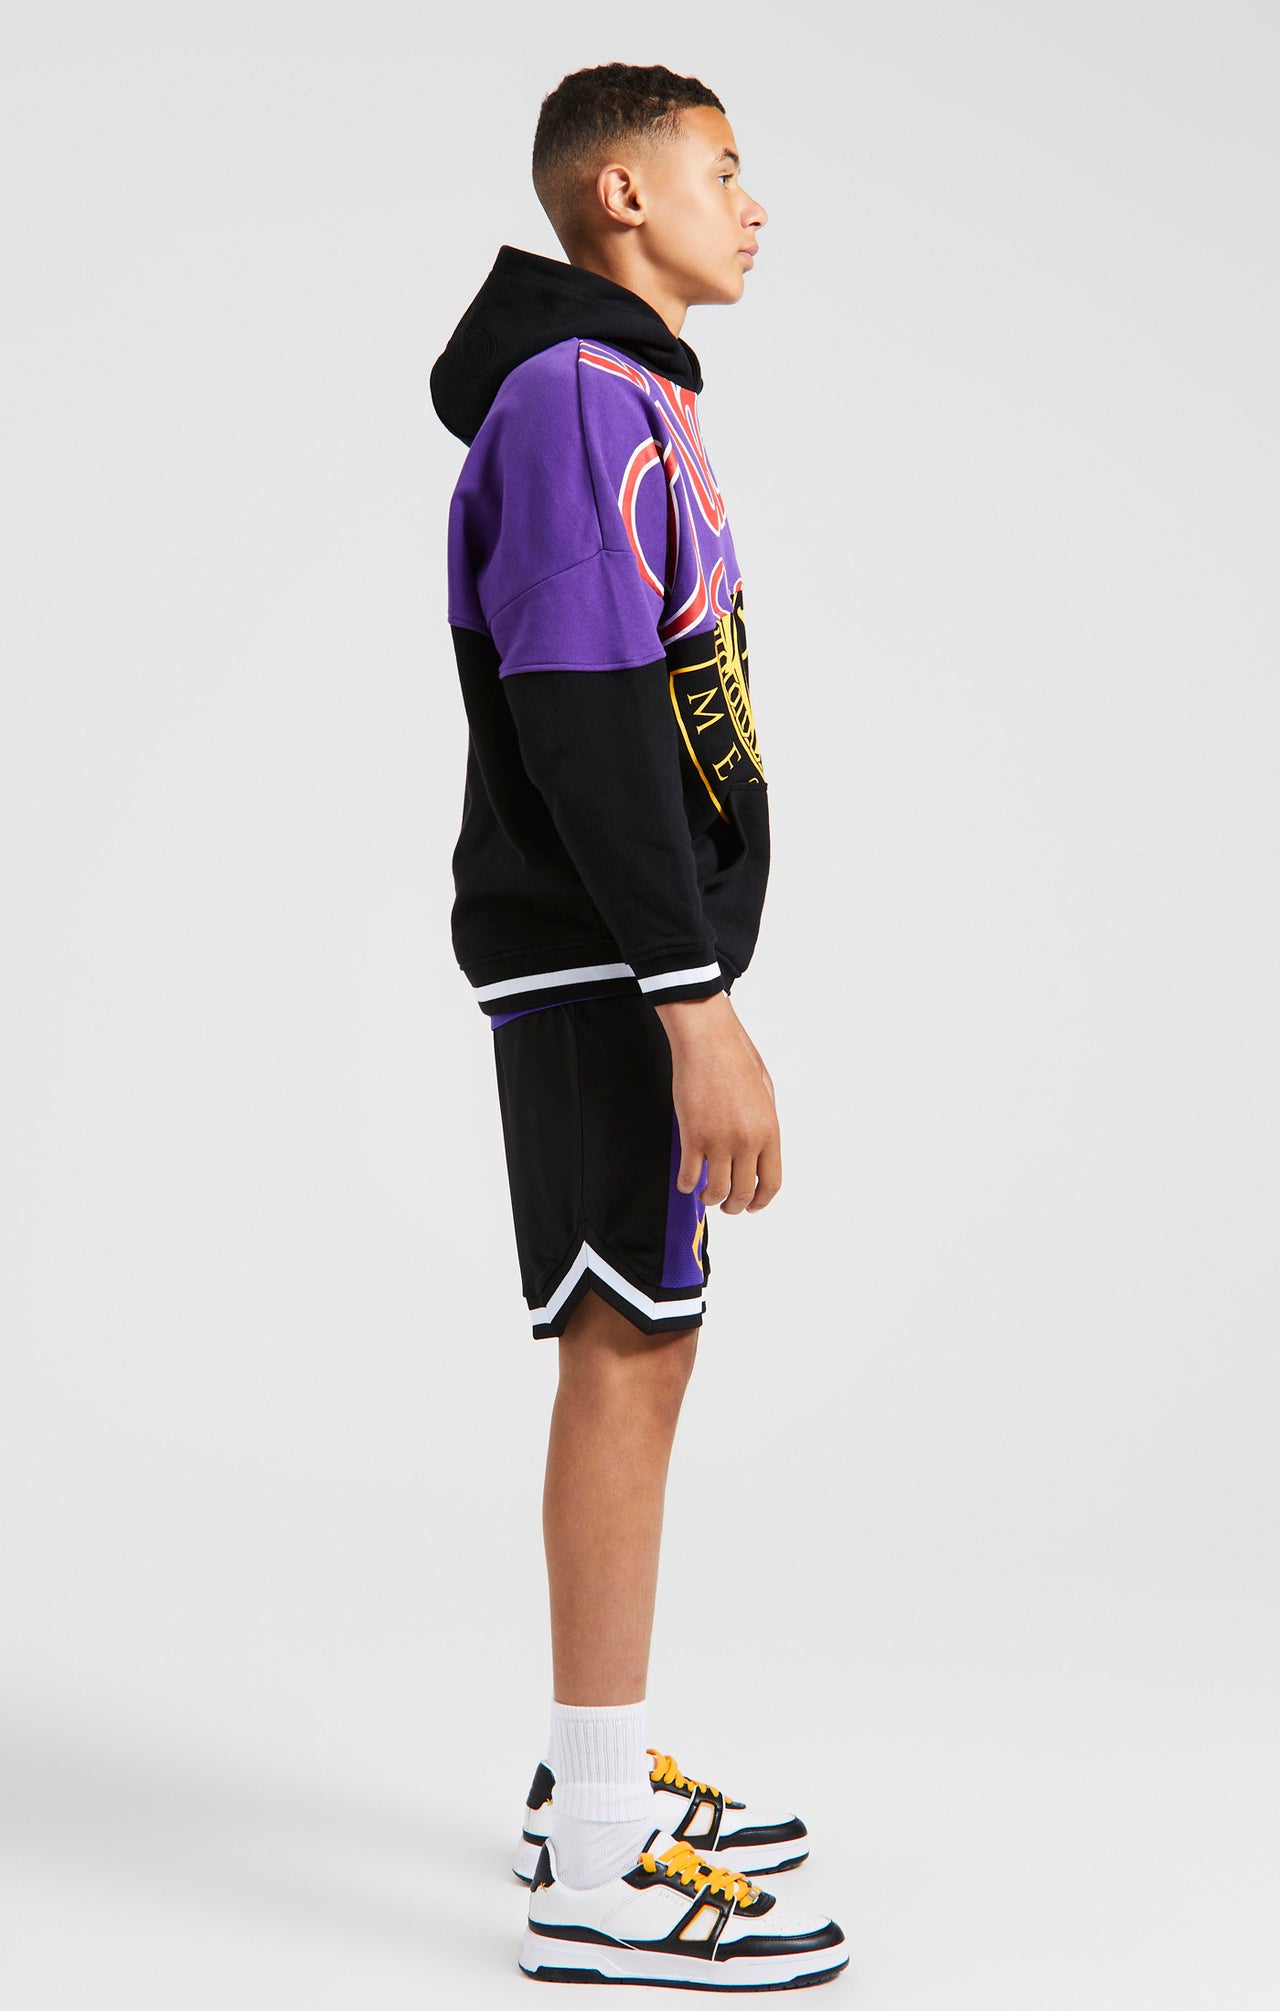 Messi x SikSilk Retro Varsity Basketball Shorts - Black & Purple (4)